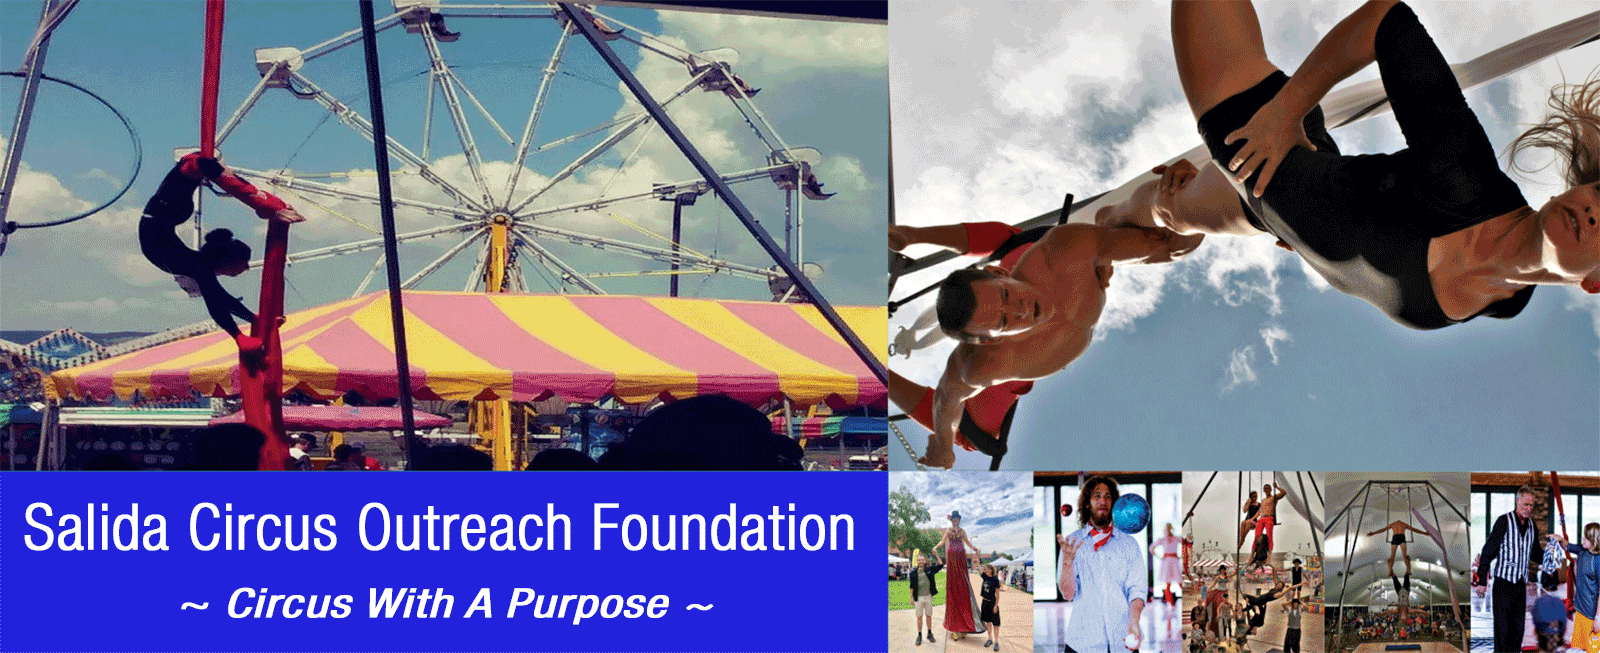 Salida Circus Outreach Foundation